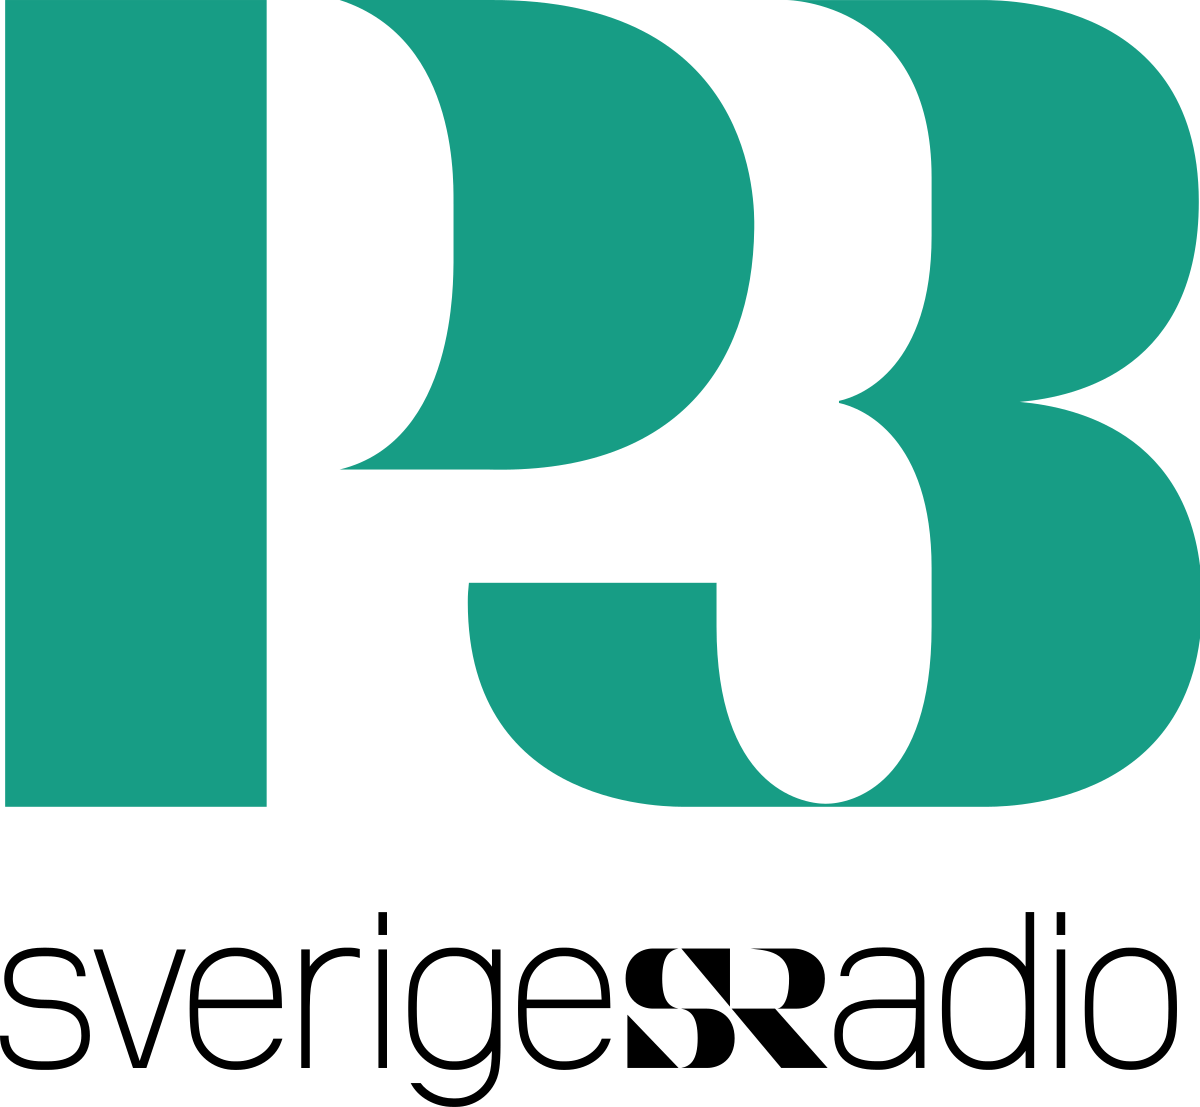 P3 Logo - Sveriges Radio P3